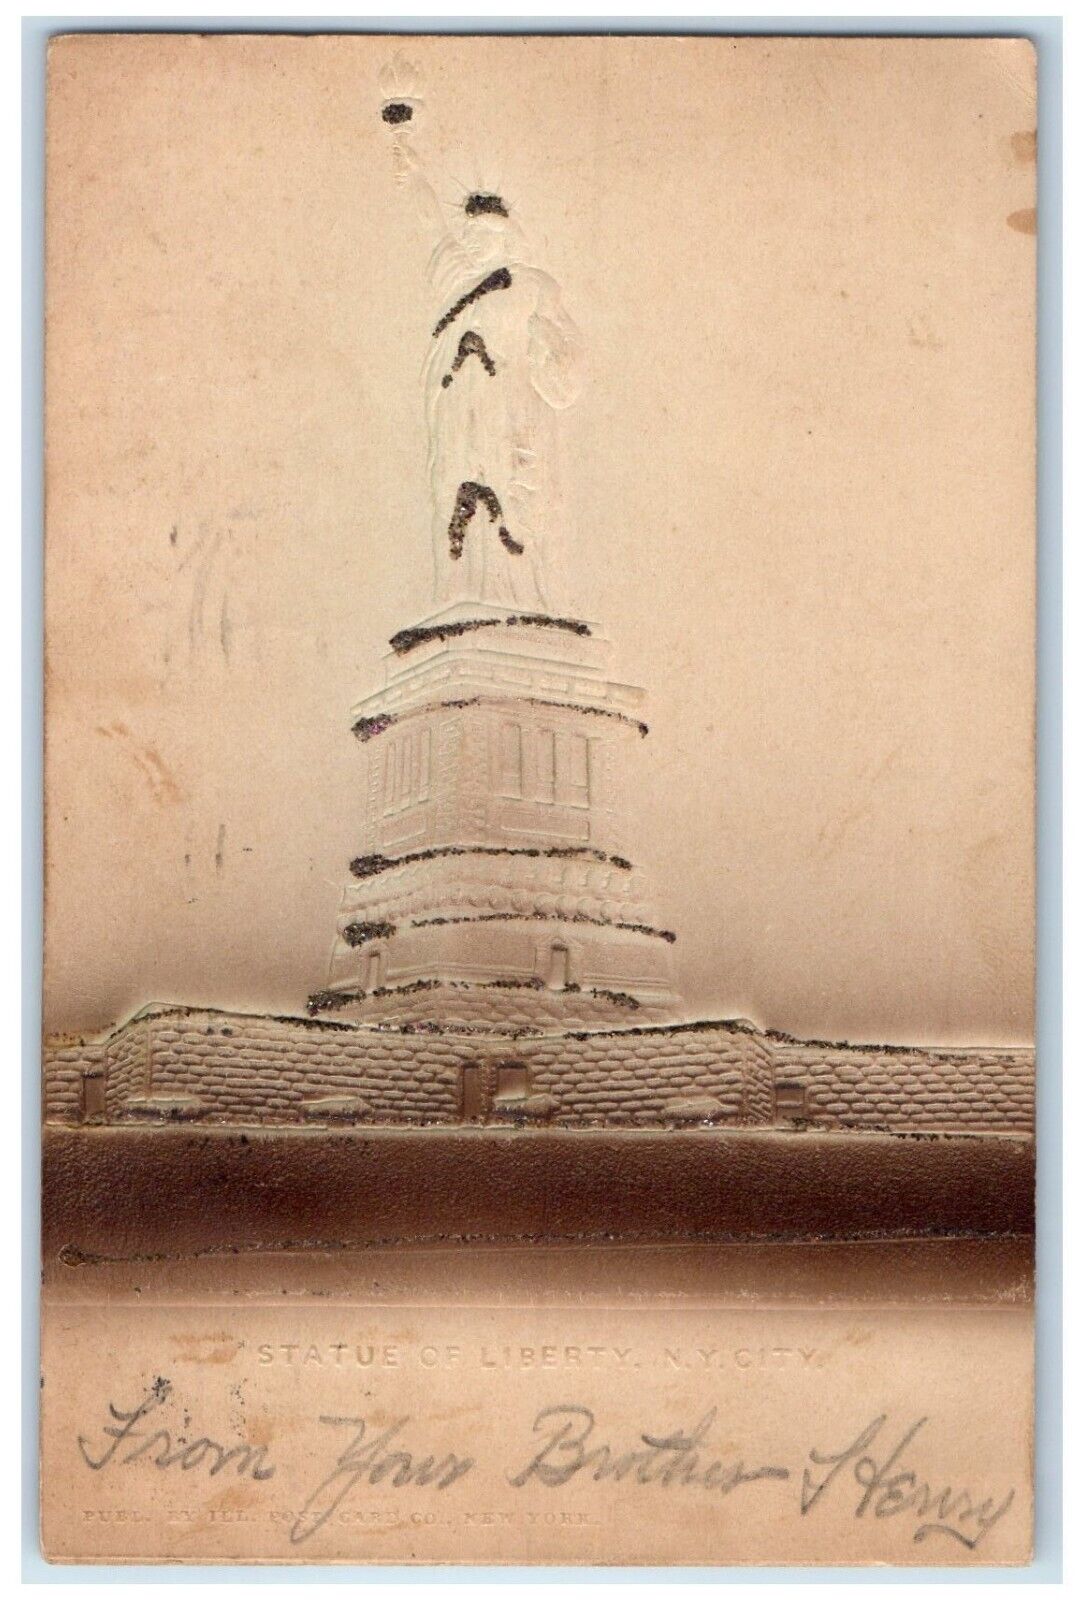 1905 Statue Of Liberty Exterior Embossed New York City New York Vintage Postcard